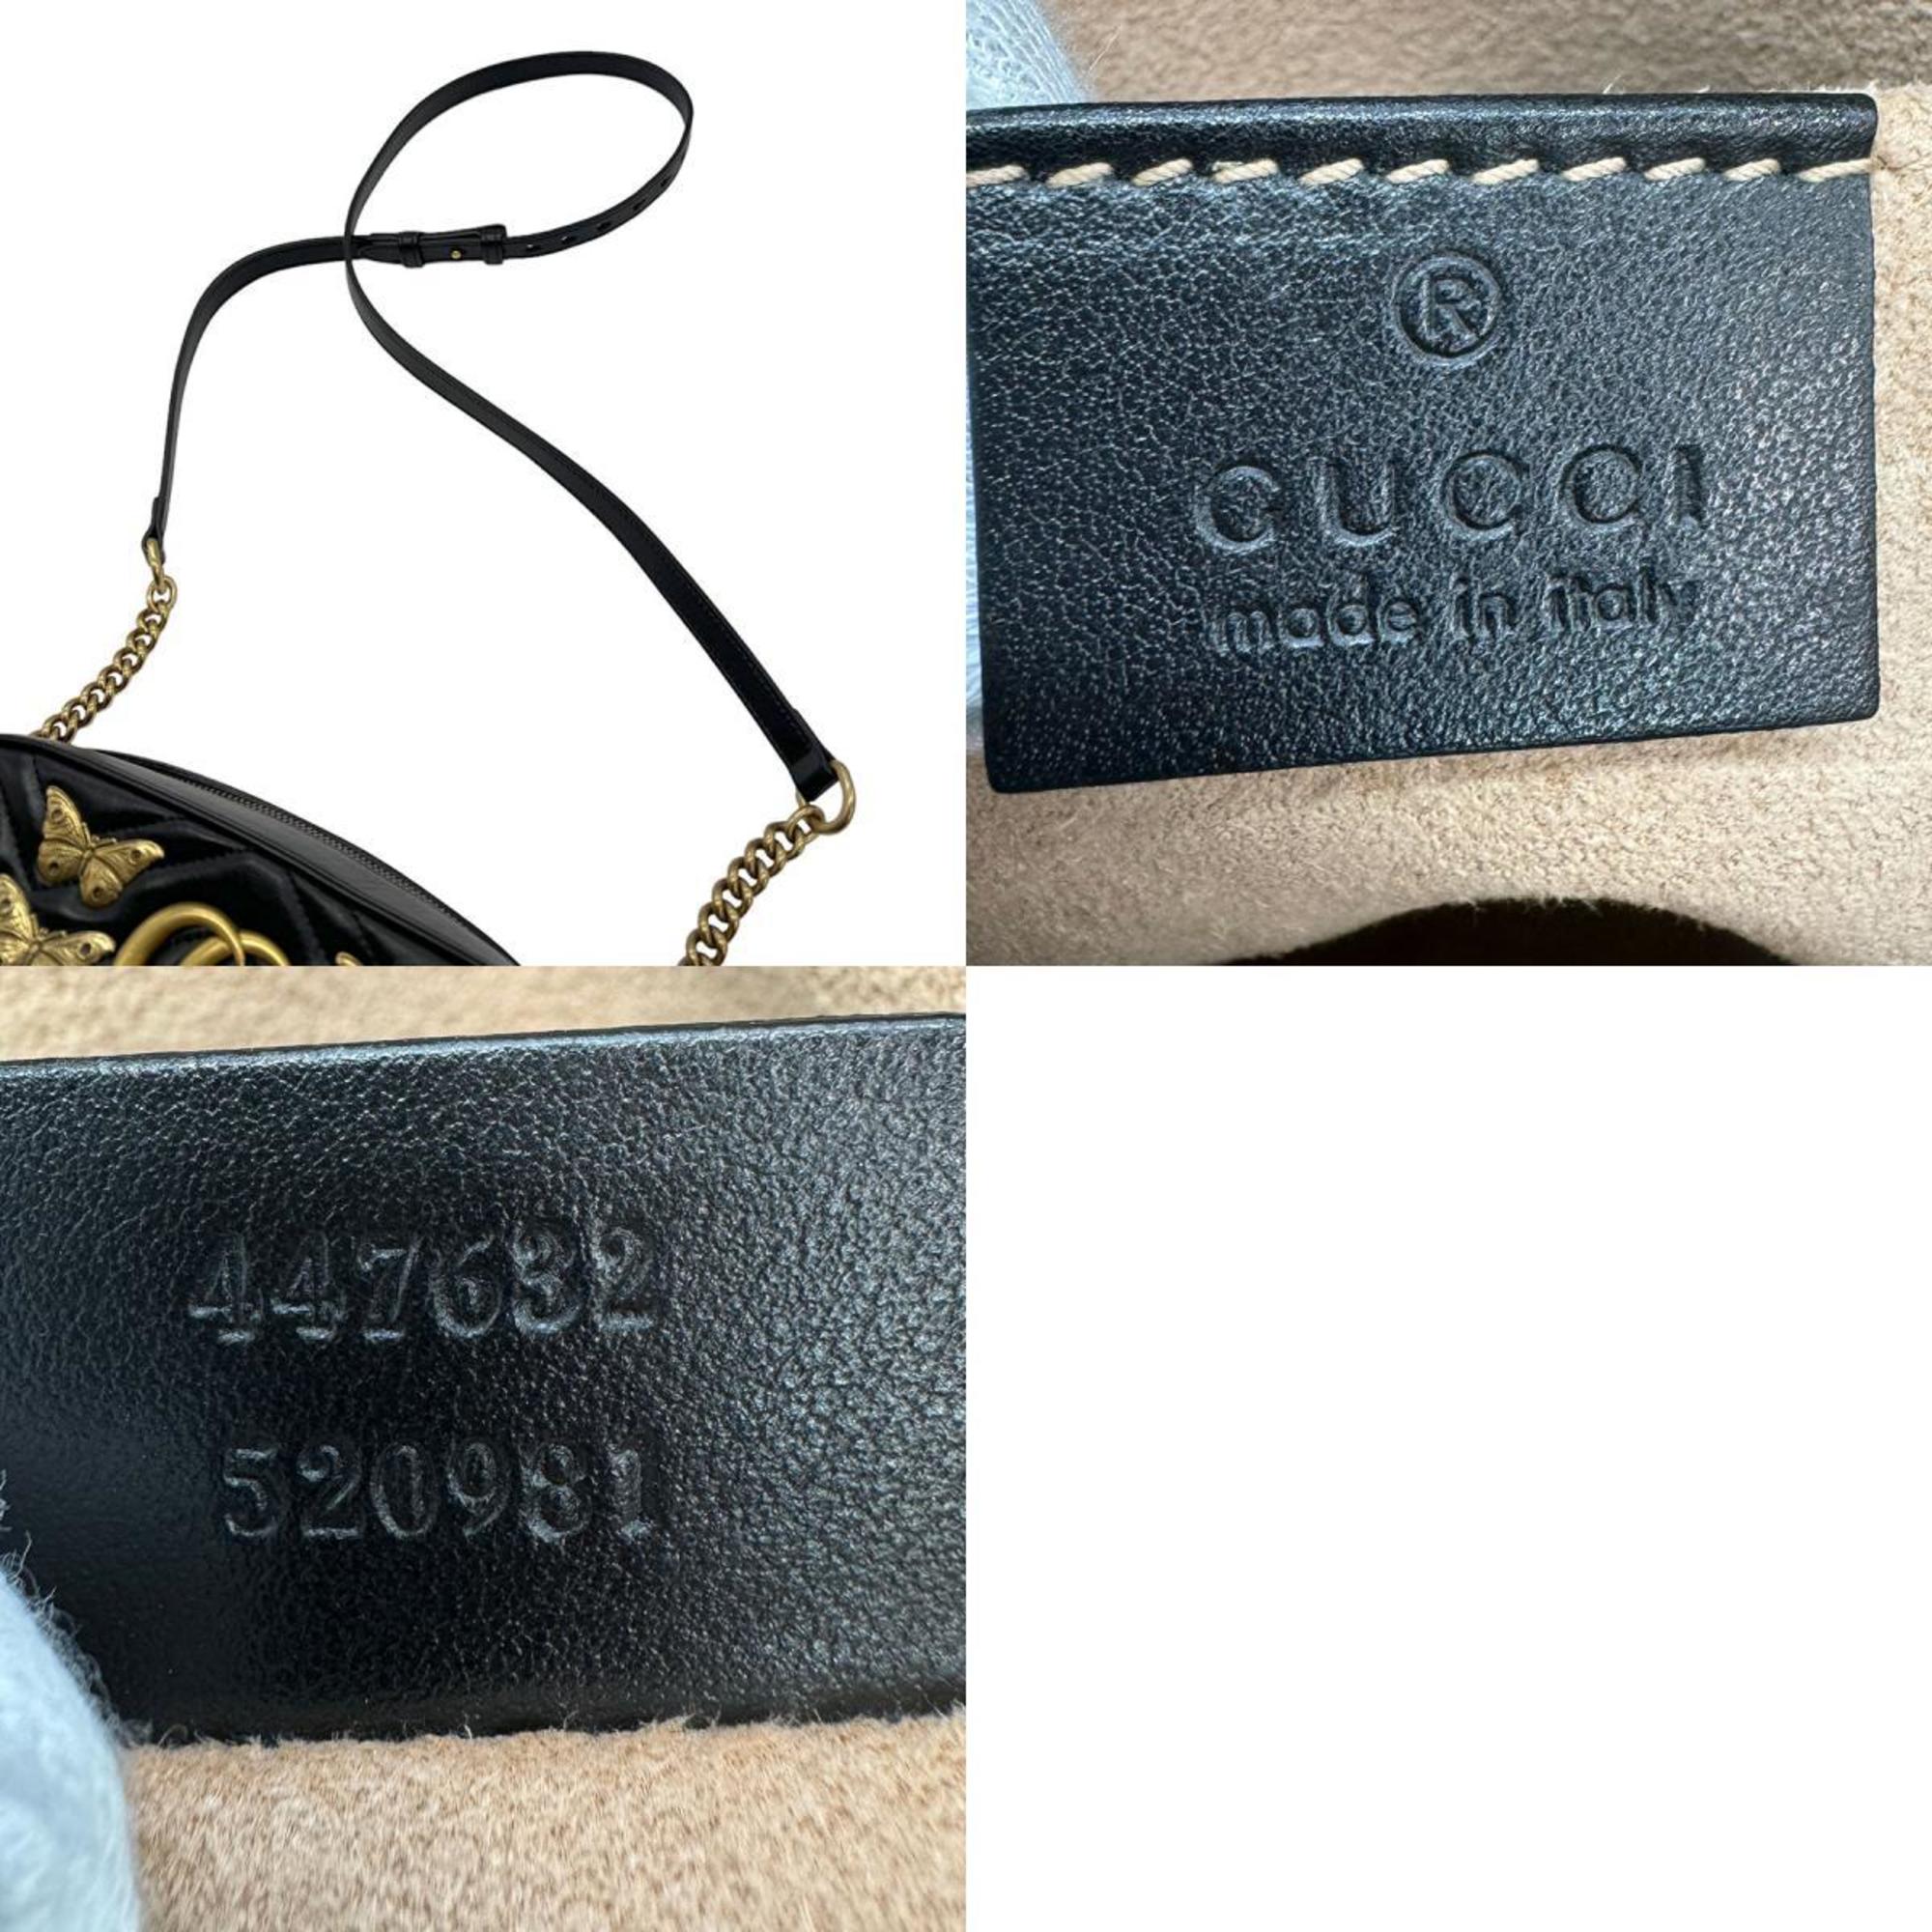 GUCCI Shoulder Bag GG Marmont Leather Black Women's 447632 z0727